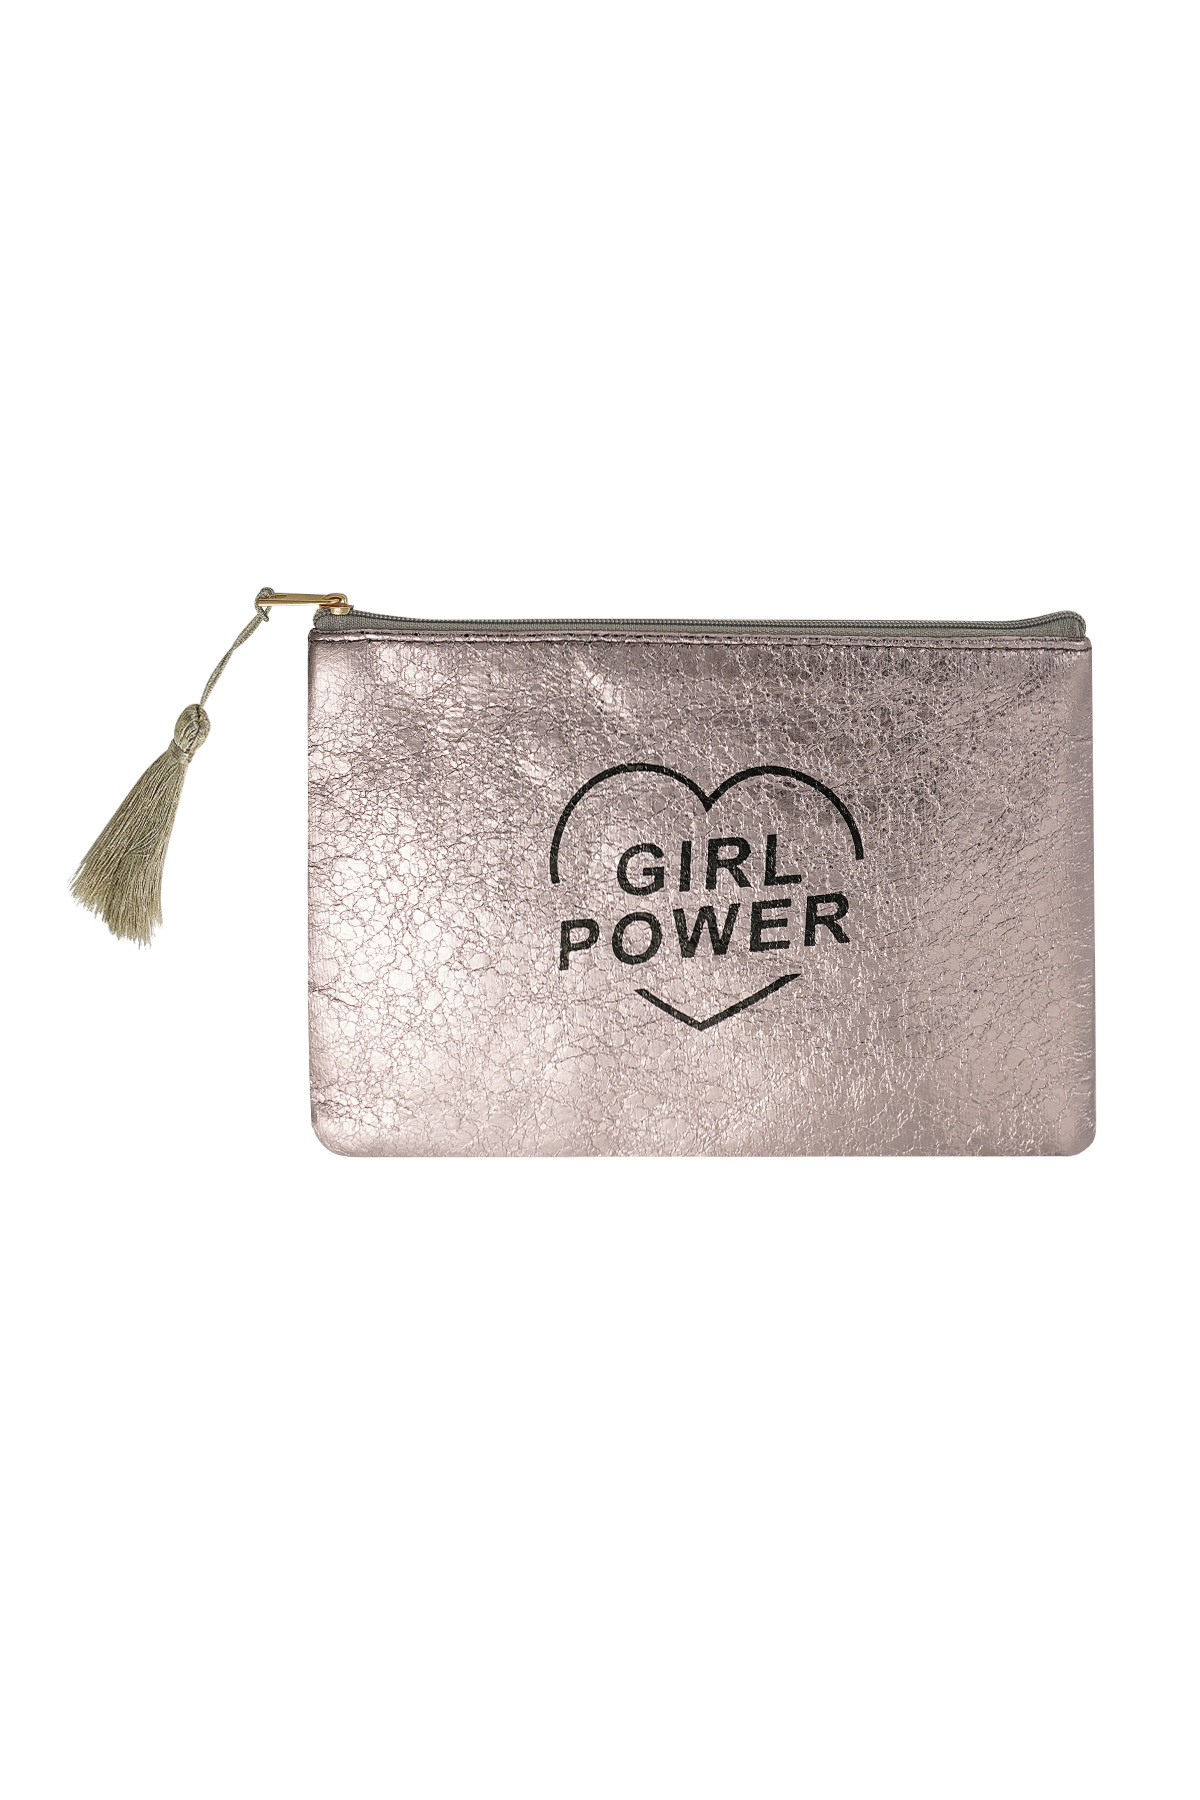 Make-up bag metallic girl power - gray